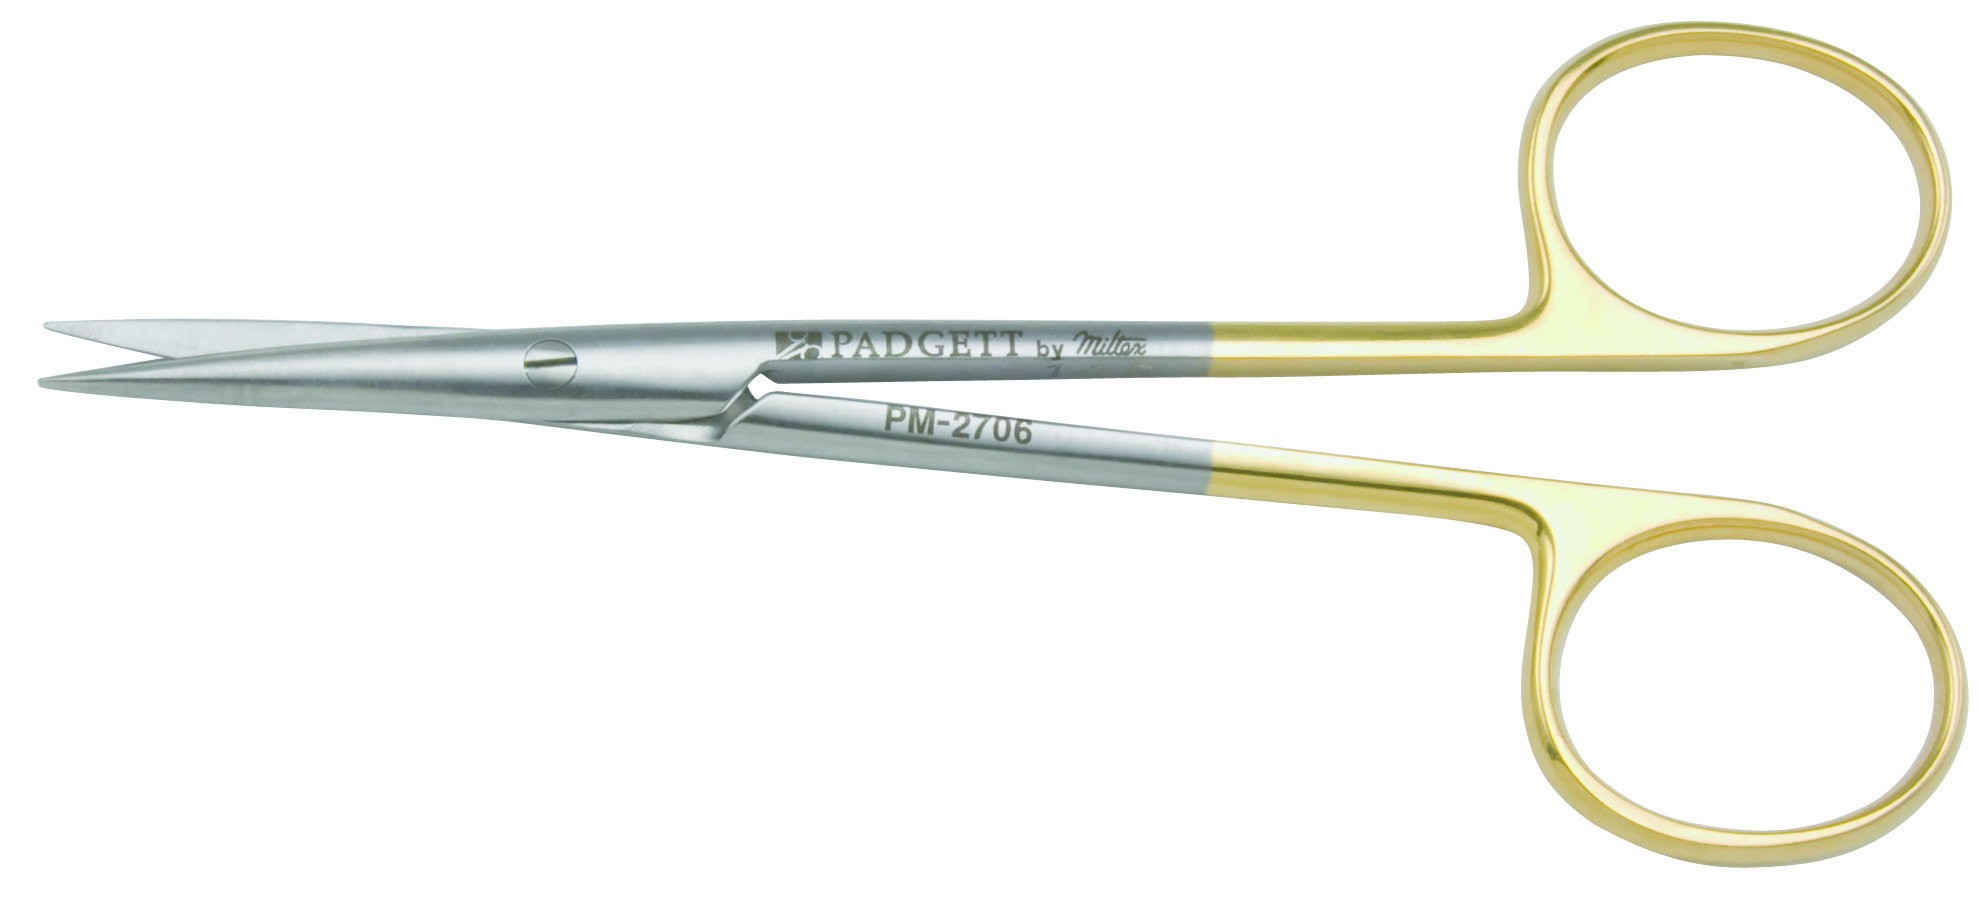 Miltex PM-2706 Padgett Iris Scissors, Tungsten Carbide, Straight